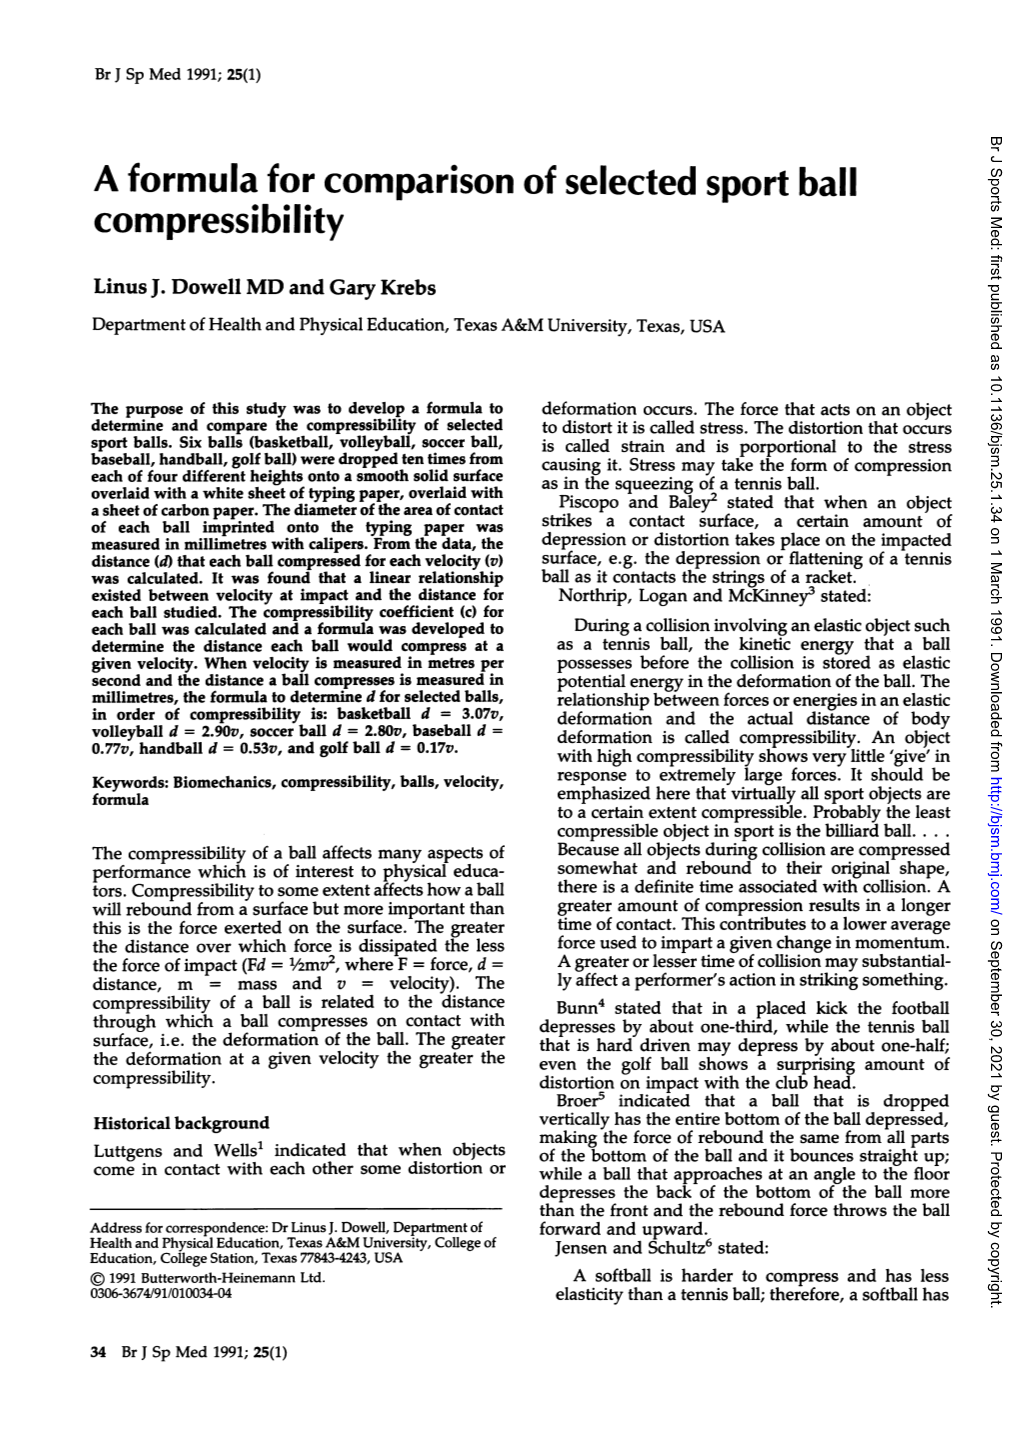 Compressibility